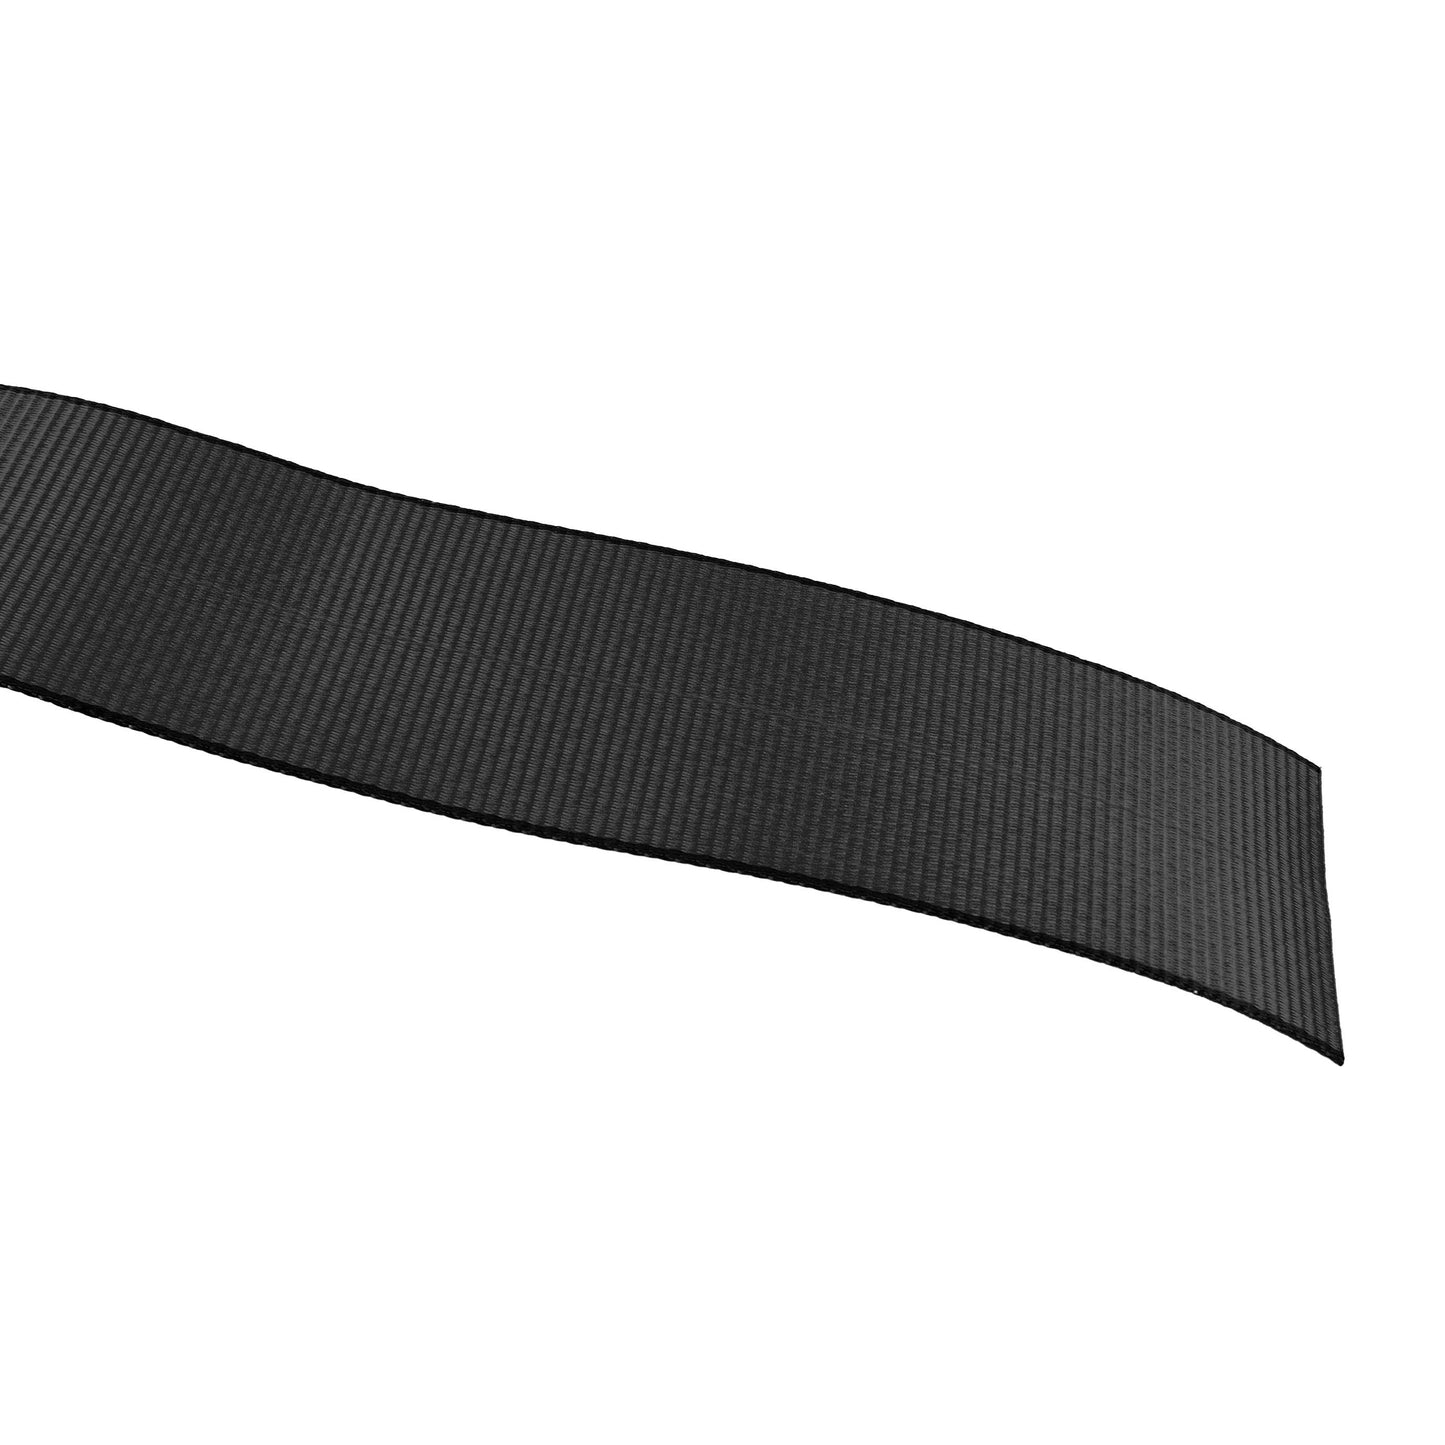 4" 20K Polyester Cargo Webbing - Linear Foot - Black